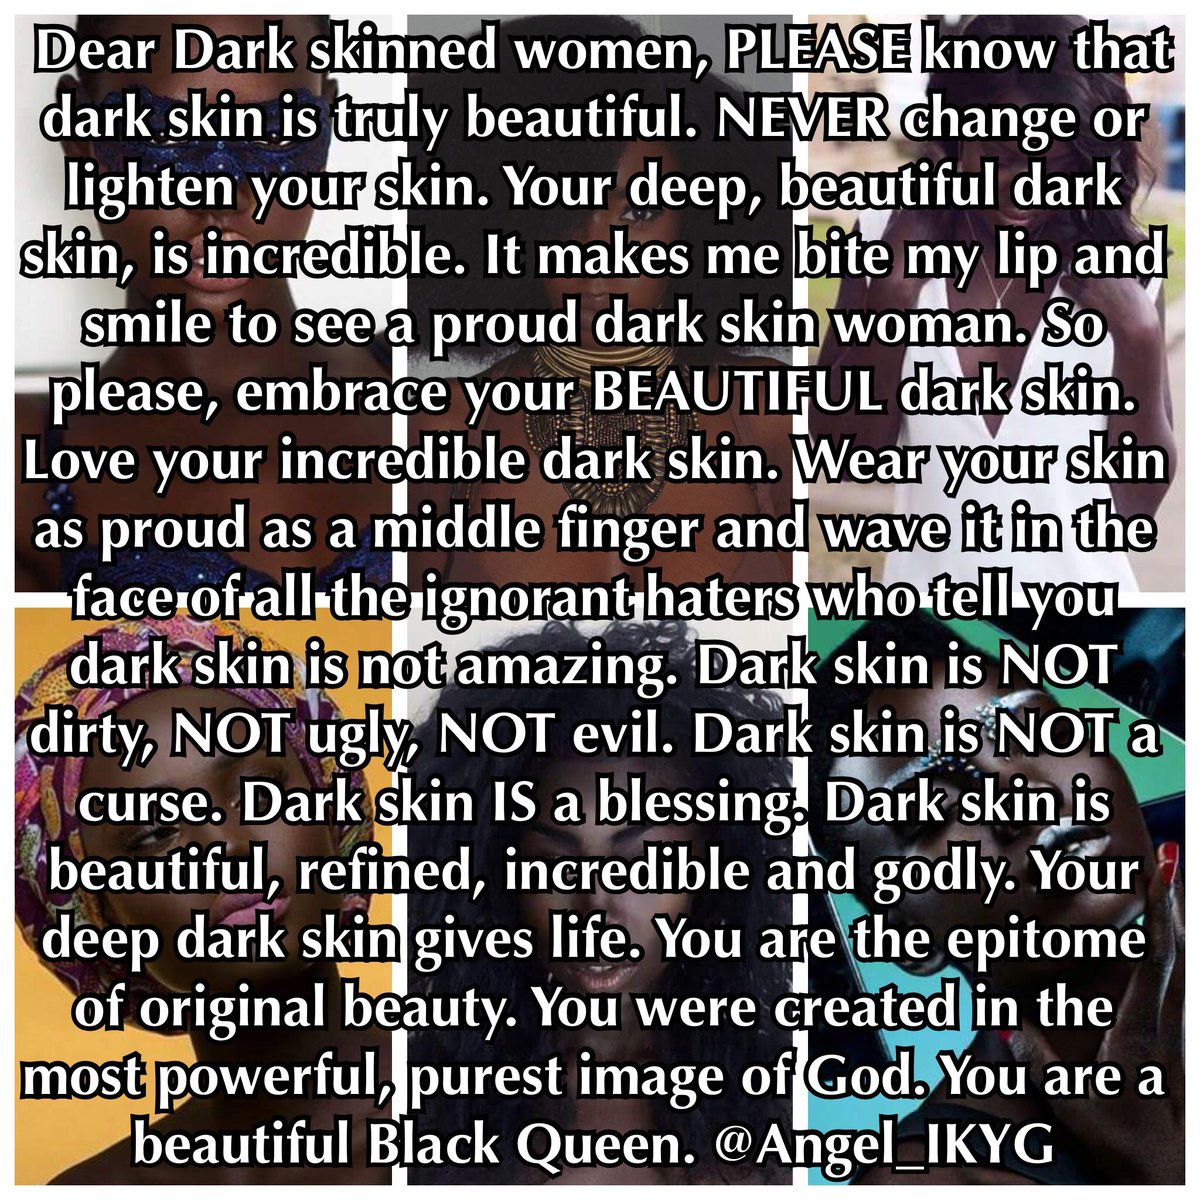 #blackwomen #darkskin #darlskinwomen #darkskinnedwomen